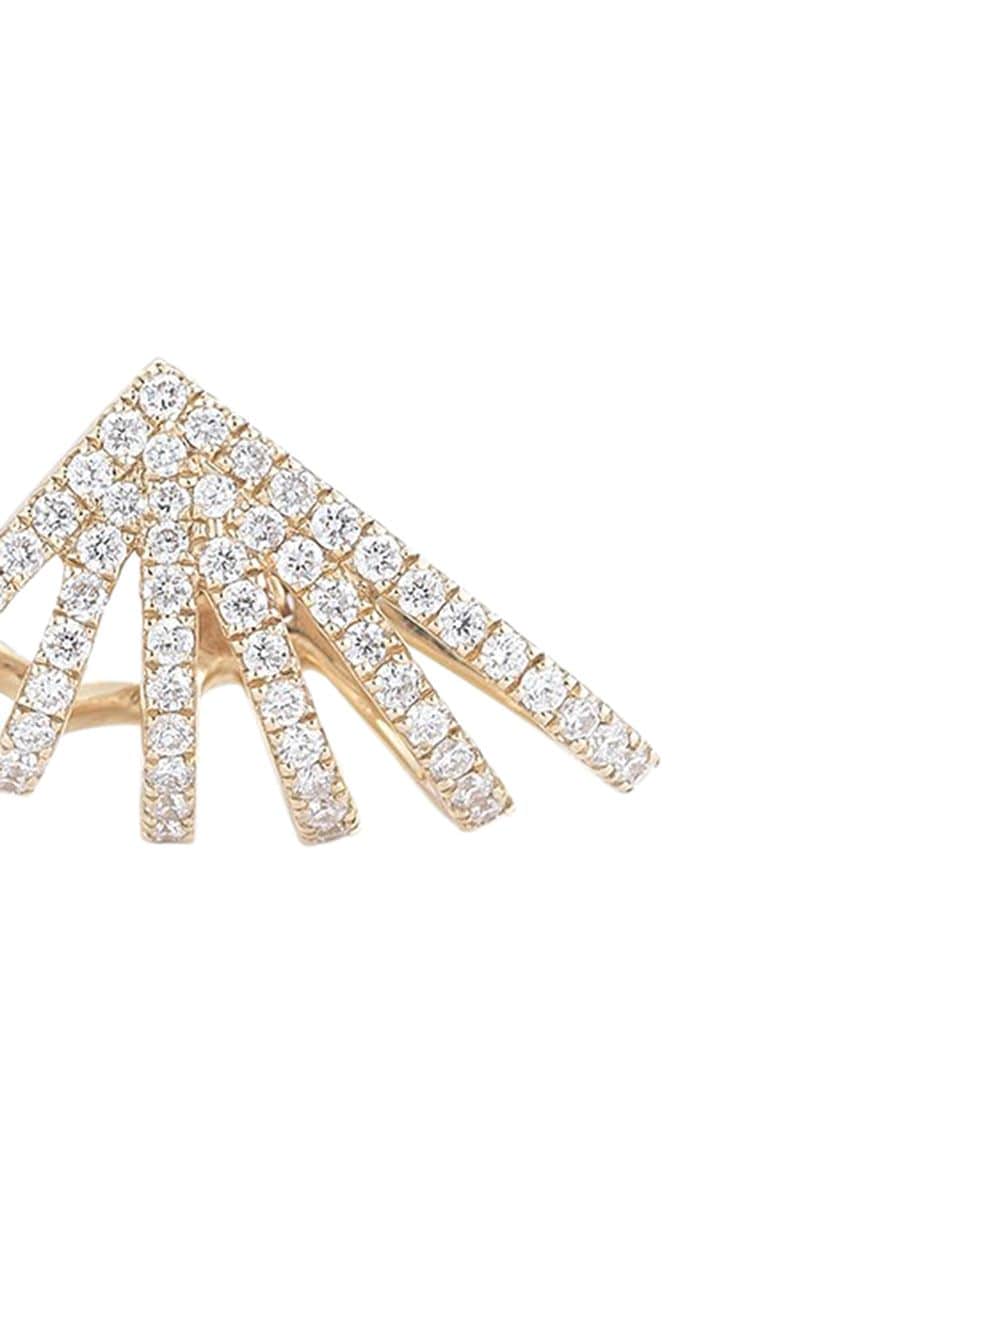 Image 2 of Dana Rebecca Designs 14kt yellow gold Sarah Leah six burst diamond earrings